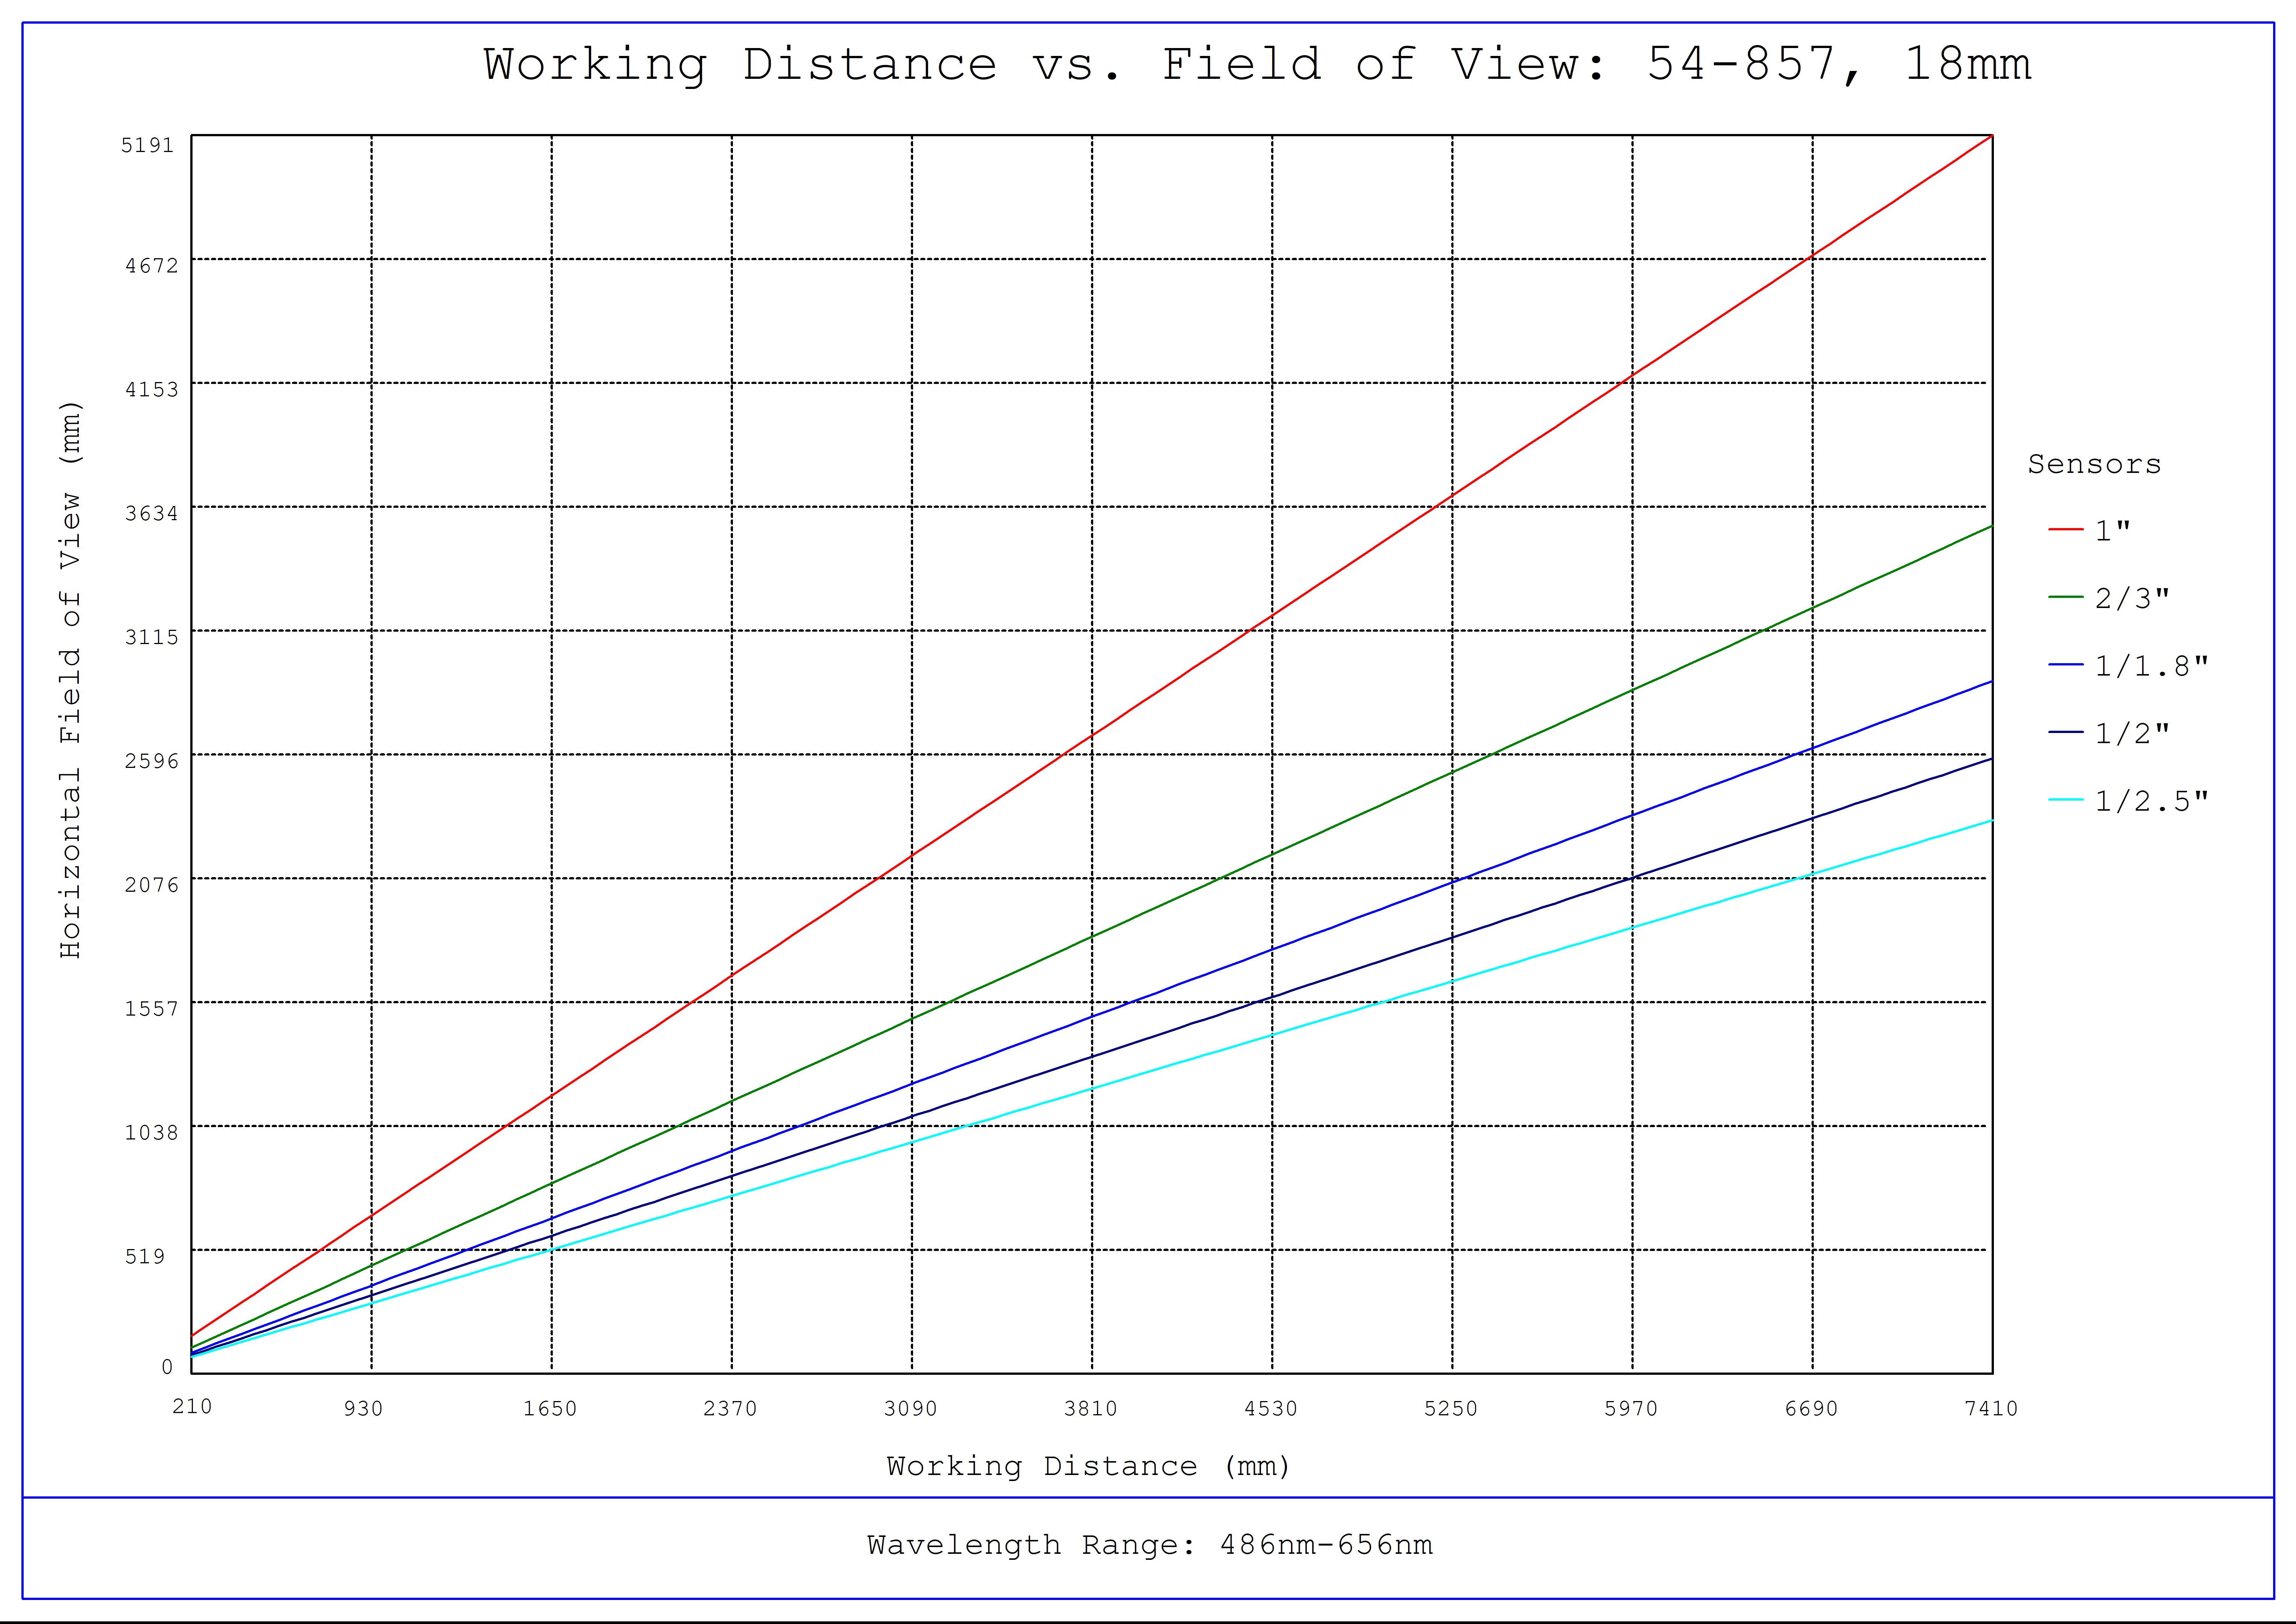 #54-857, 18mm DG Series Fixed Focal Length Lens, Working Distance versus Field of View Plot